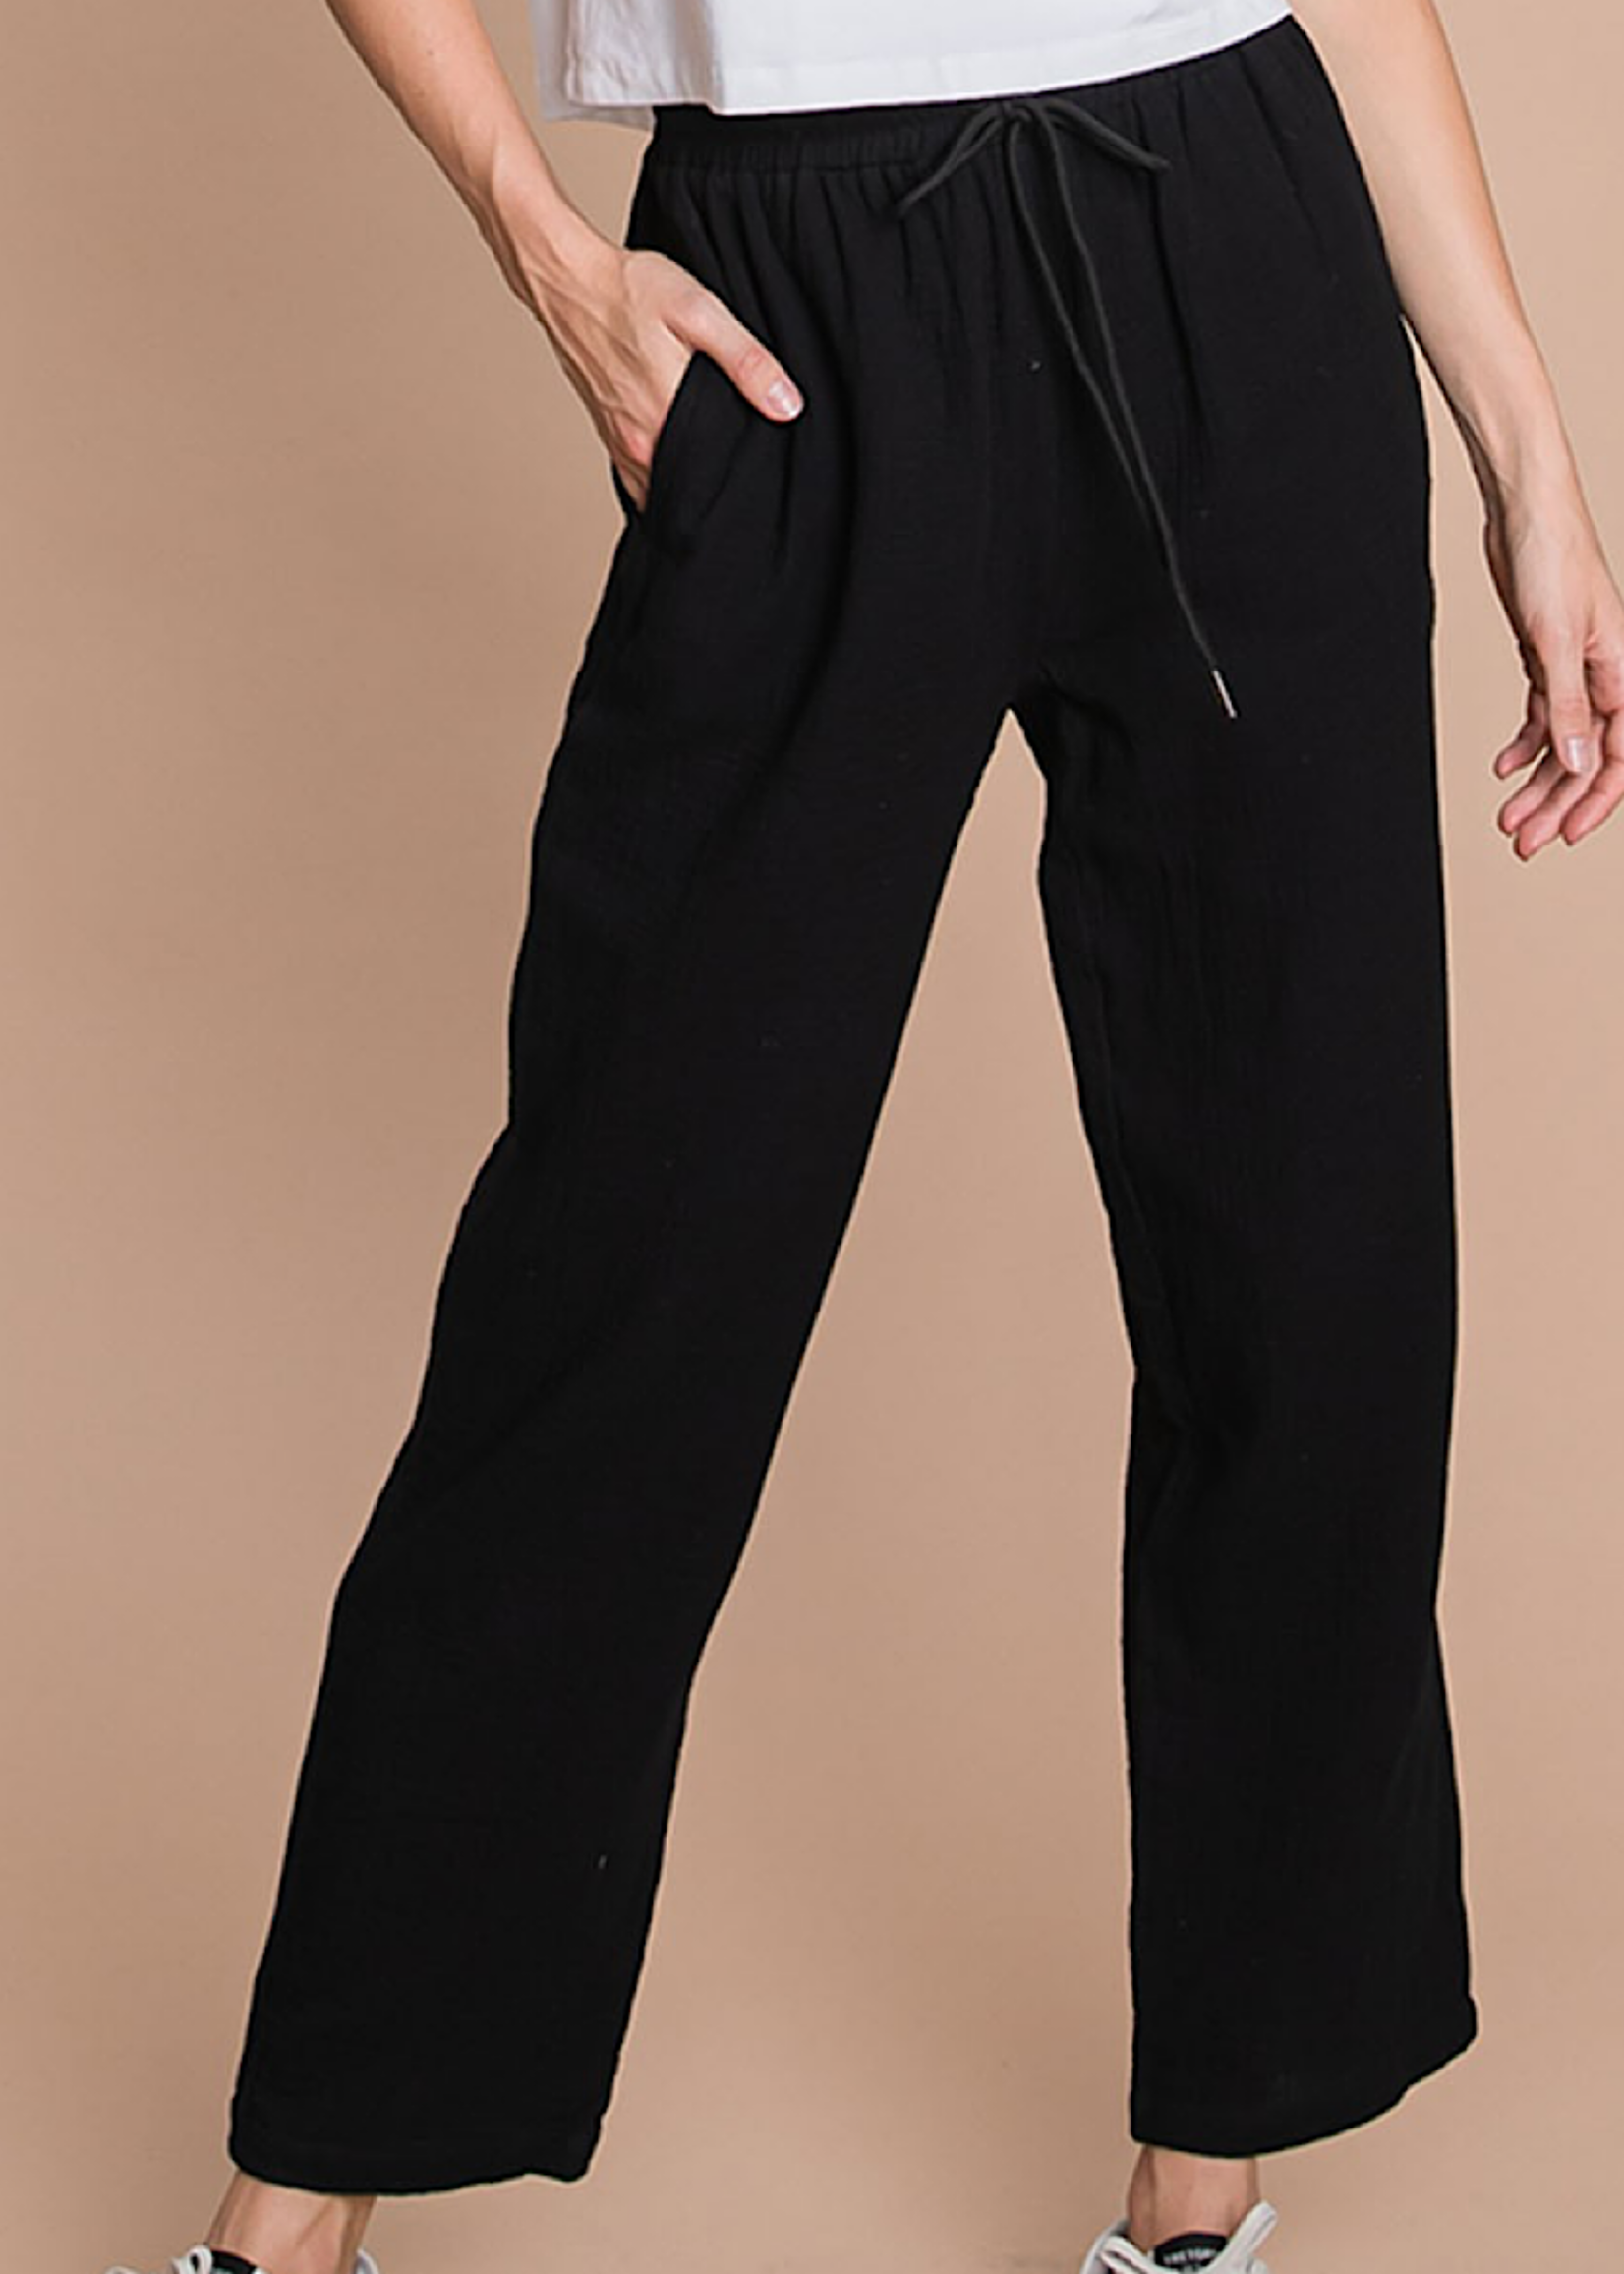 luvamia Women's Classic Denim Capri Jeans Ripped Skinny Stretch Pants  Classic Blue, M, Fit Size 8 Size 10 - Walmart.com